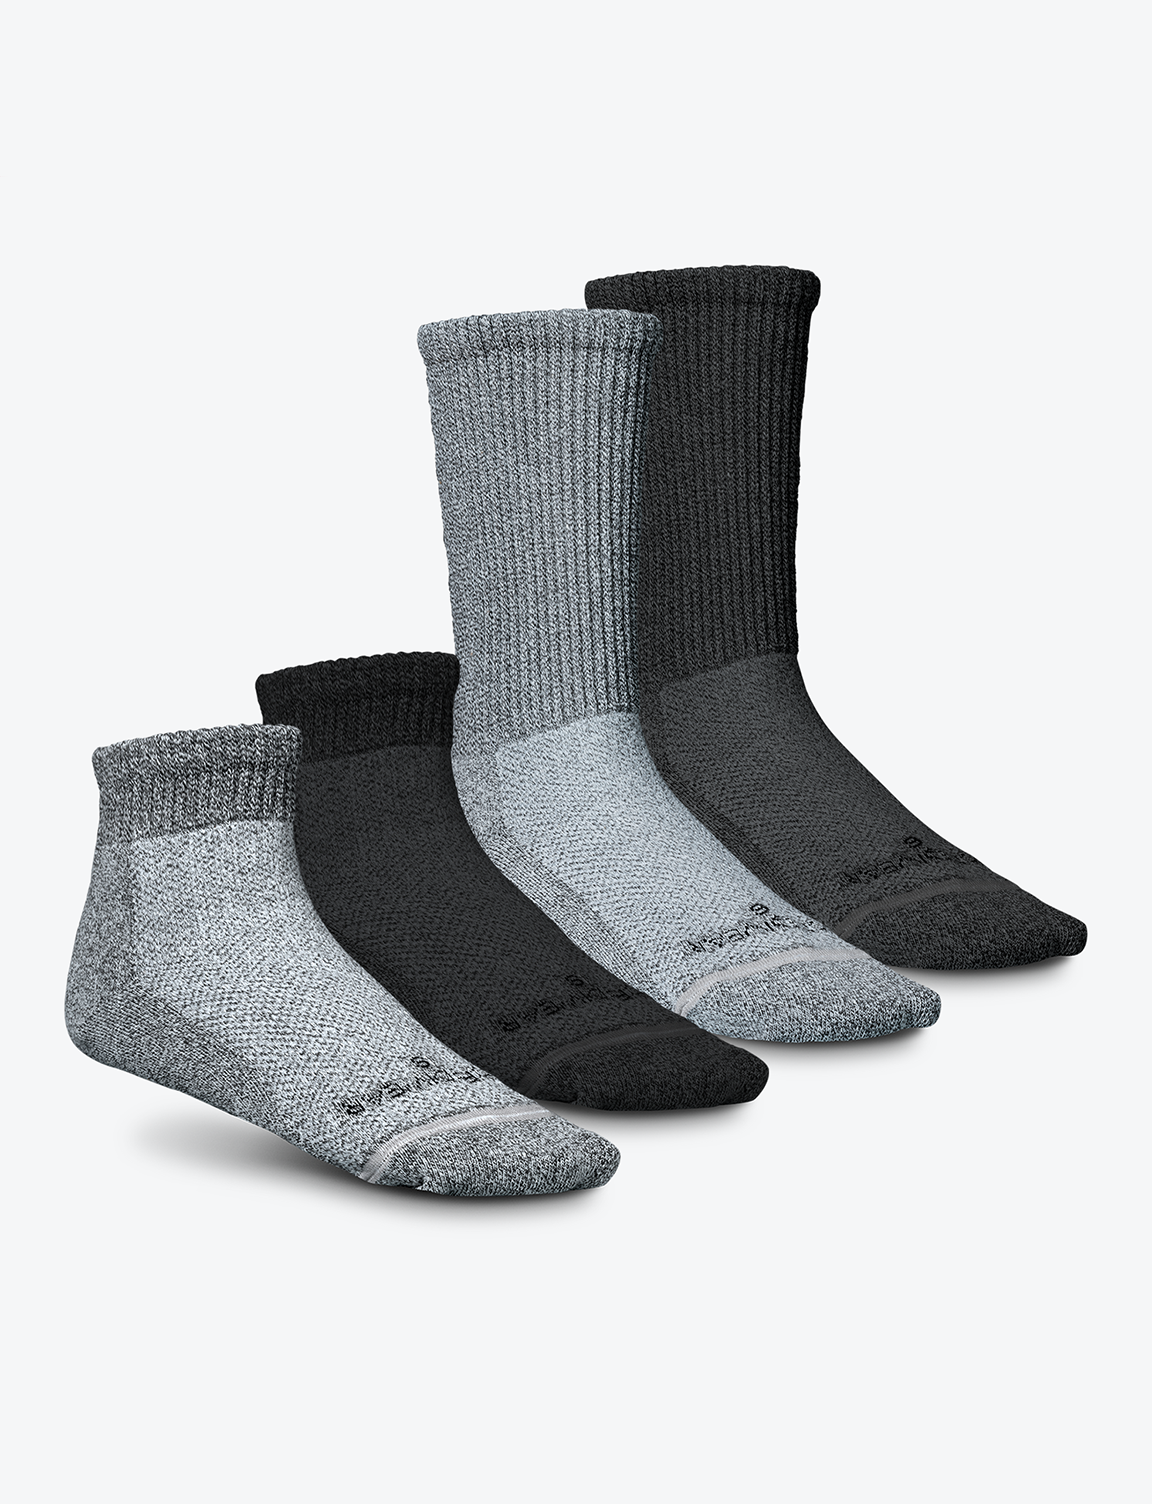 Incrediwear Canada Circulation Socks